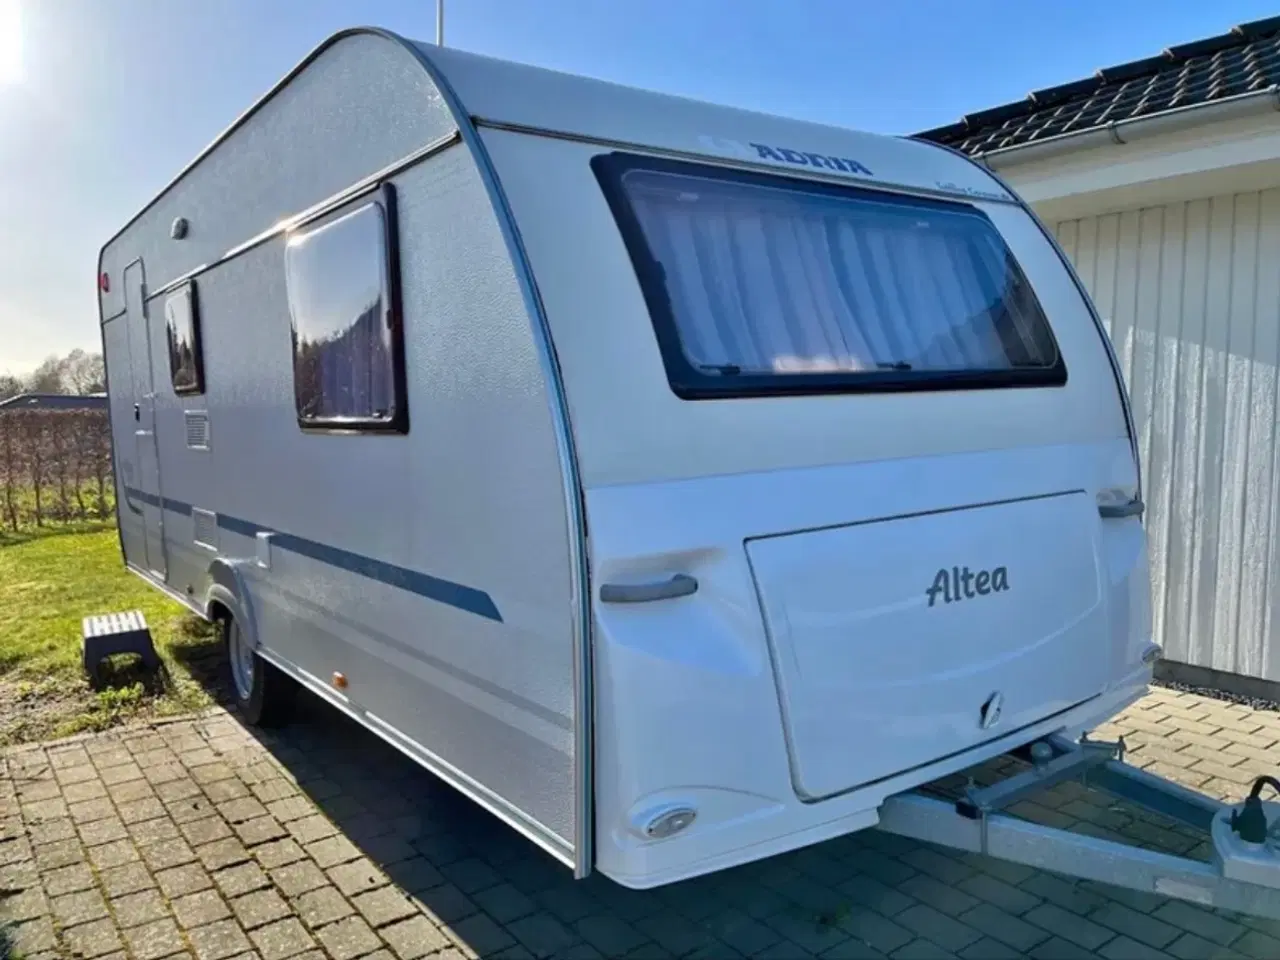 Billede 1 - Adria Altea 542 pk campingvogn